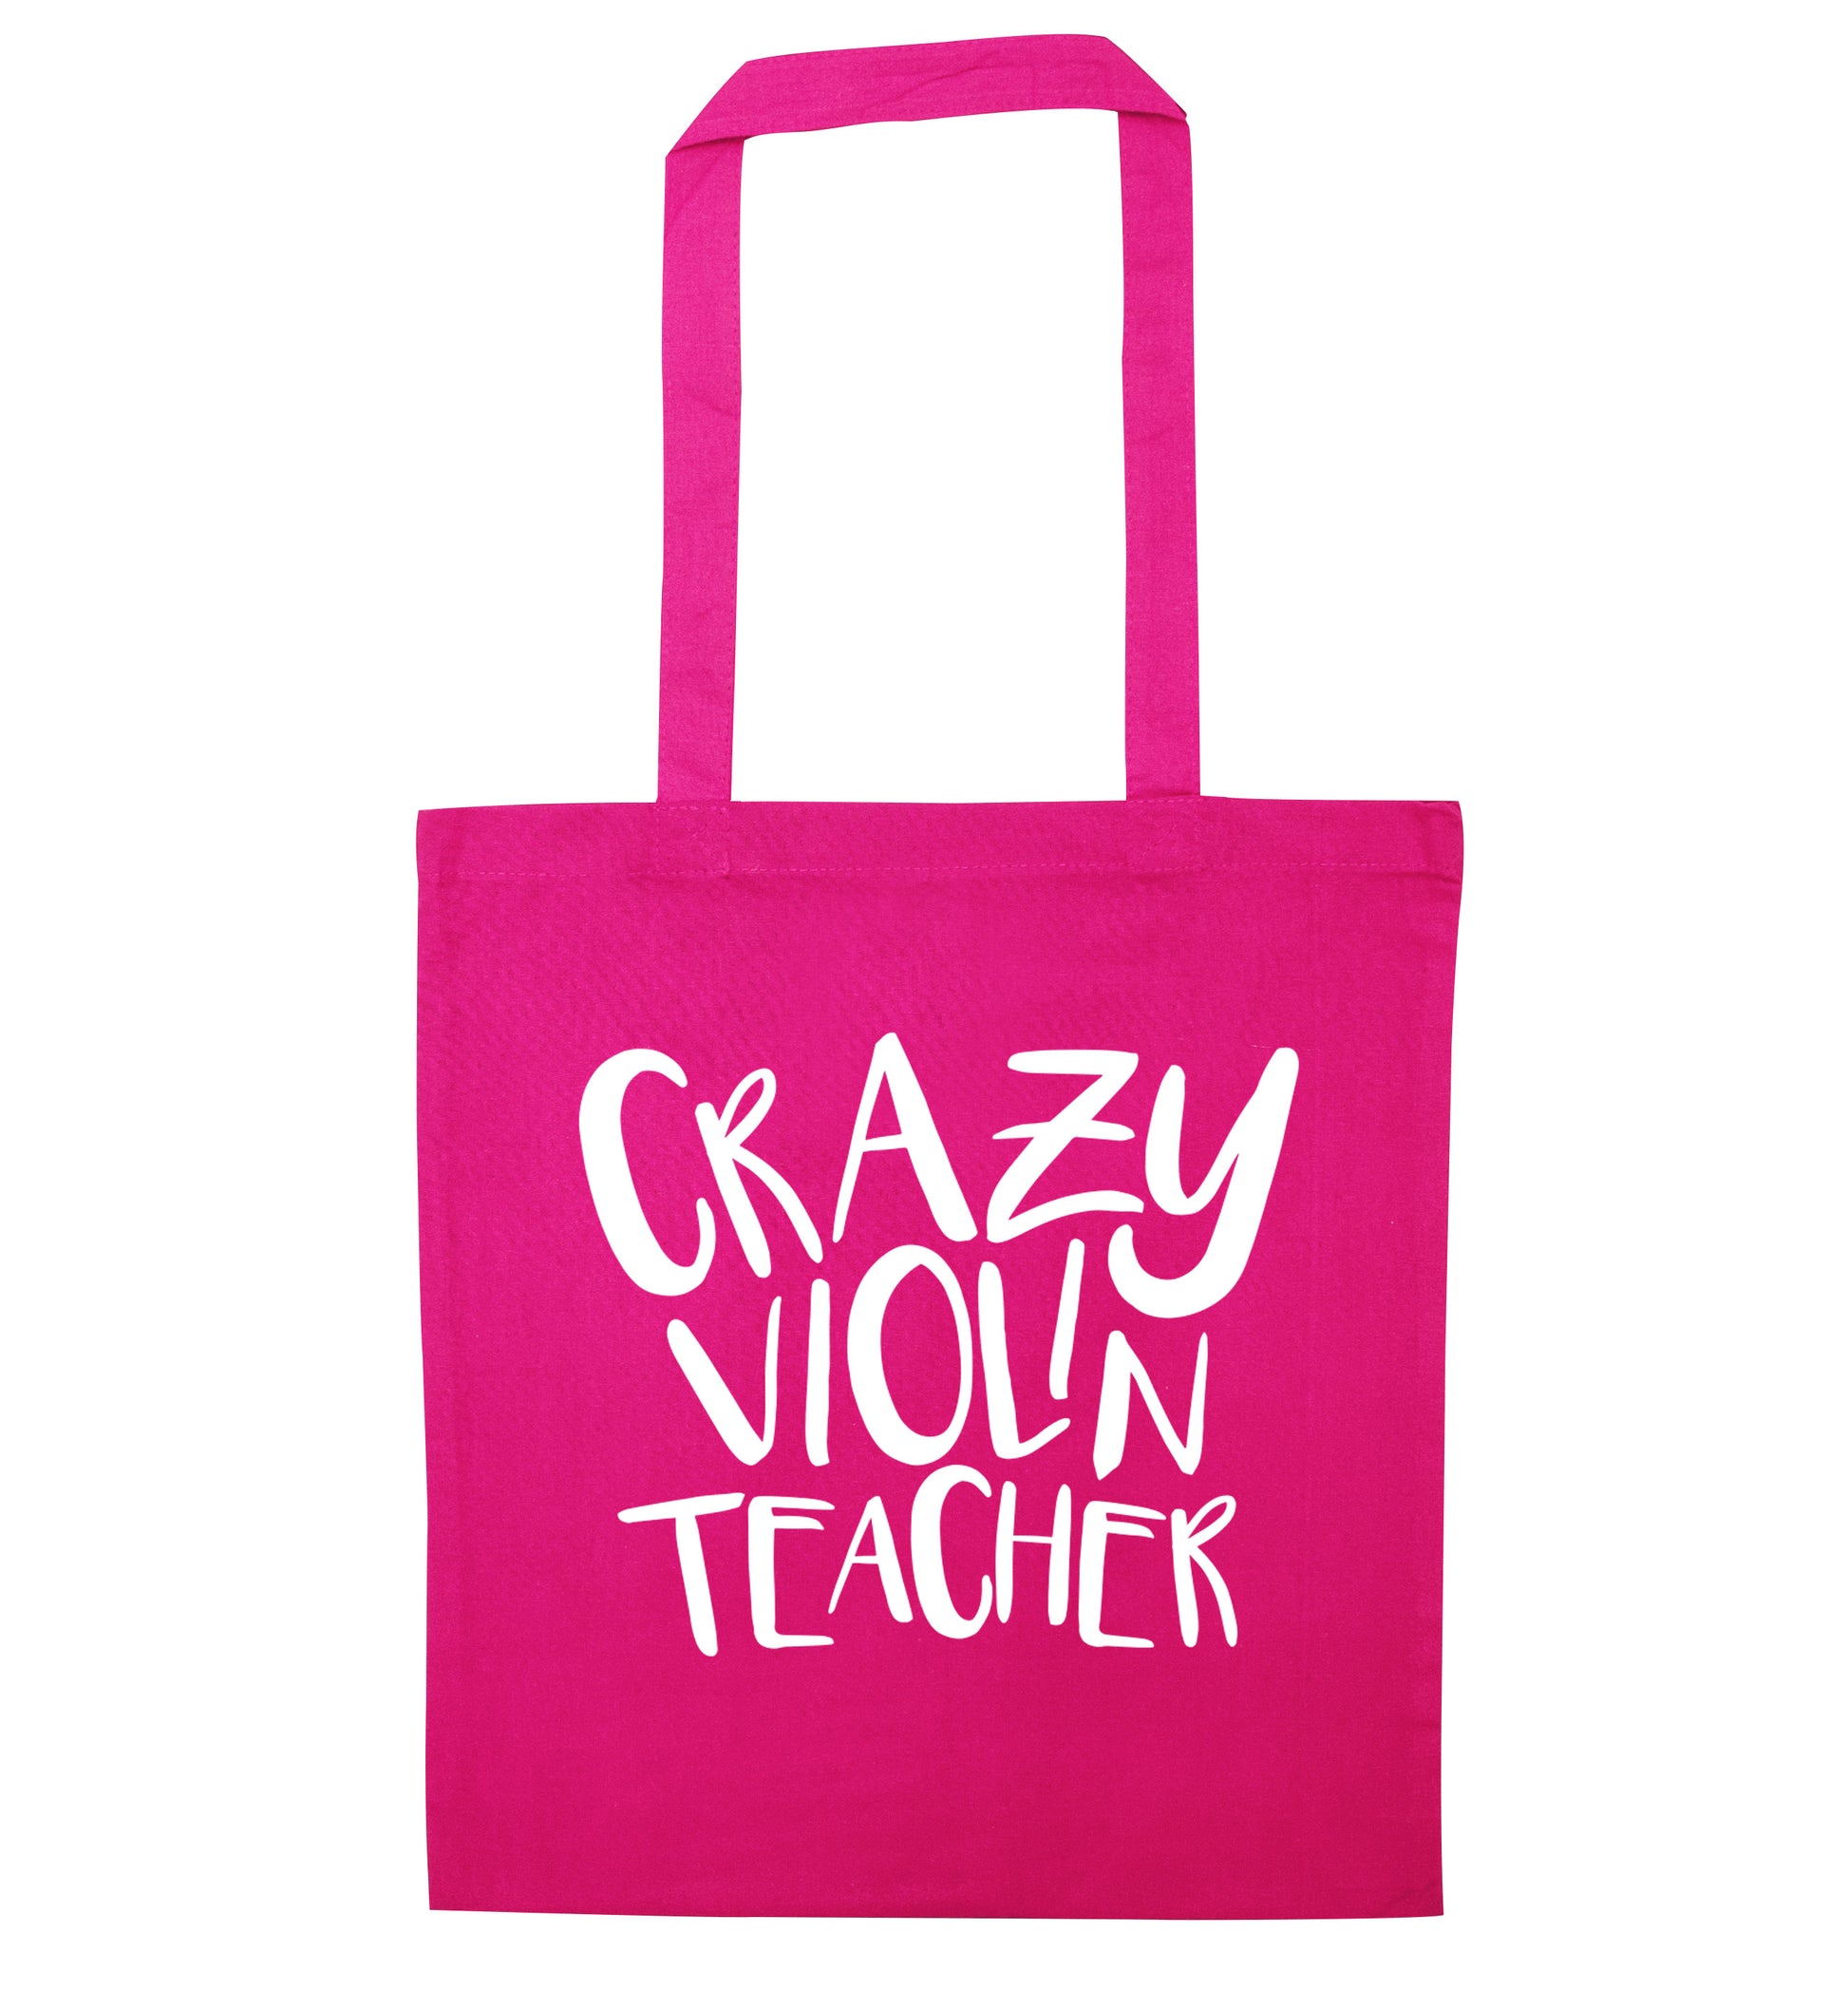 Crazy violin teacher pink tote bag